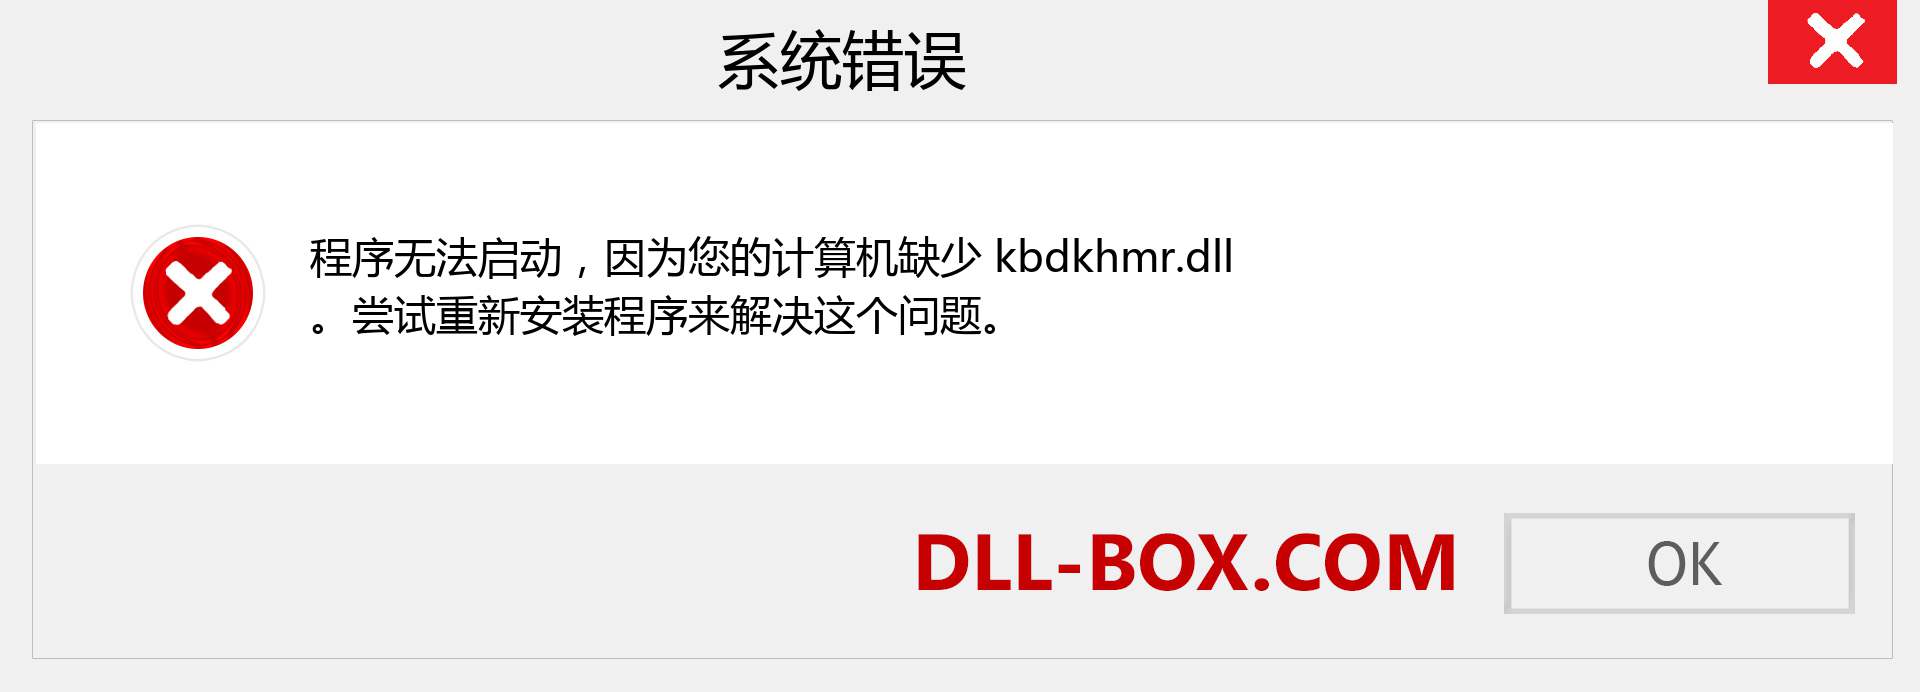 kbdkhmr.dll 文件丢失？。 适用于 Windows 7、8、10 的下载 - 修复 Windows、照片、图像上的 kbdkhmr dll 丢失错误